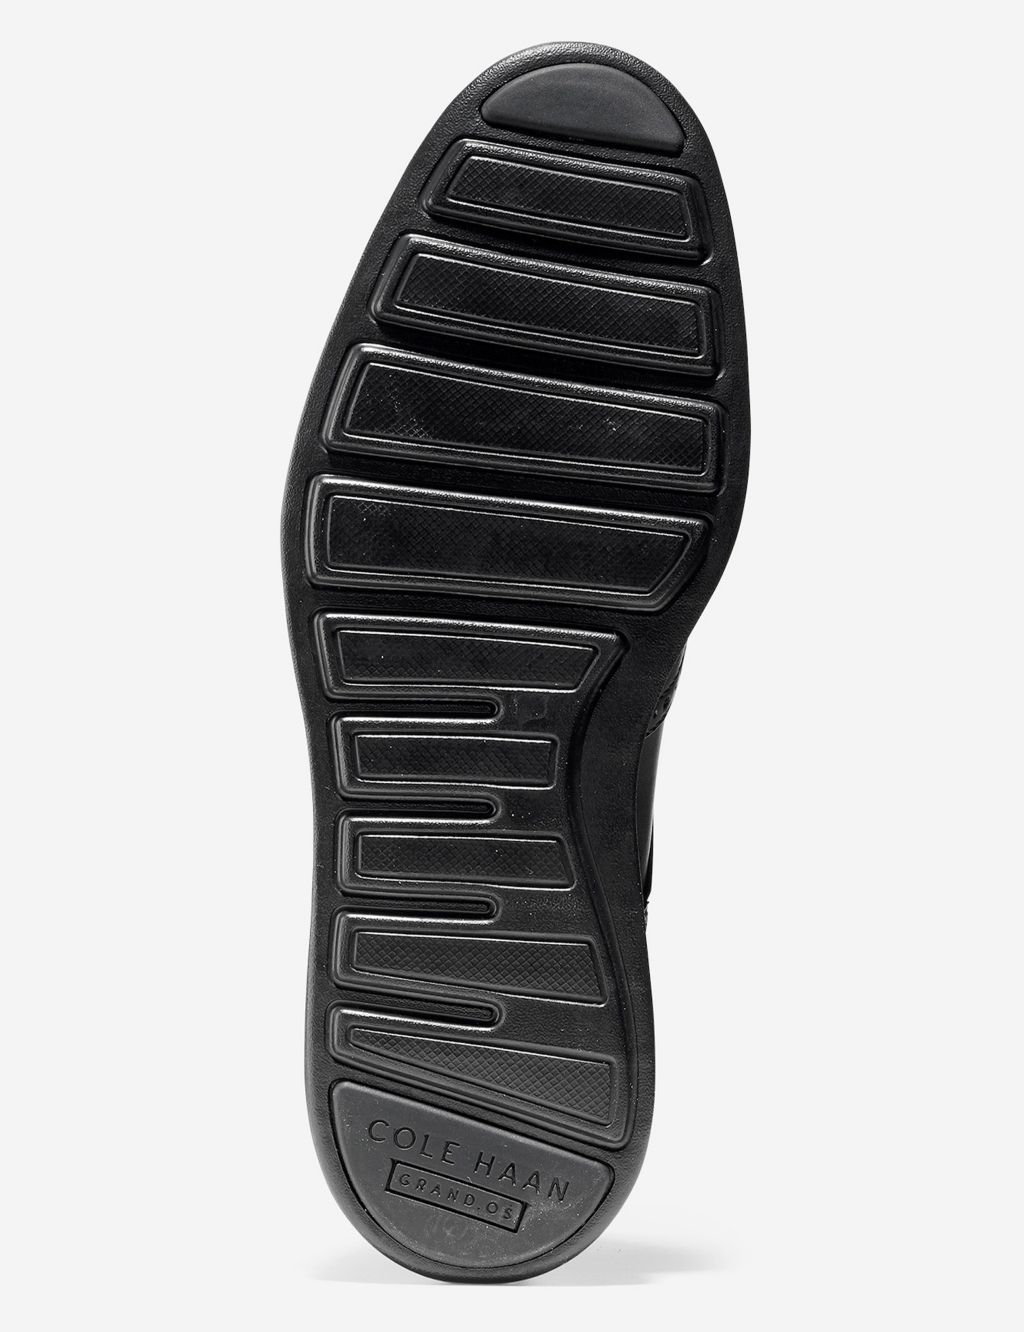 Originalgrand Leather Oxford Shoes image 5